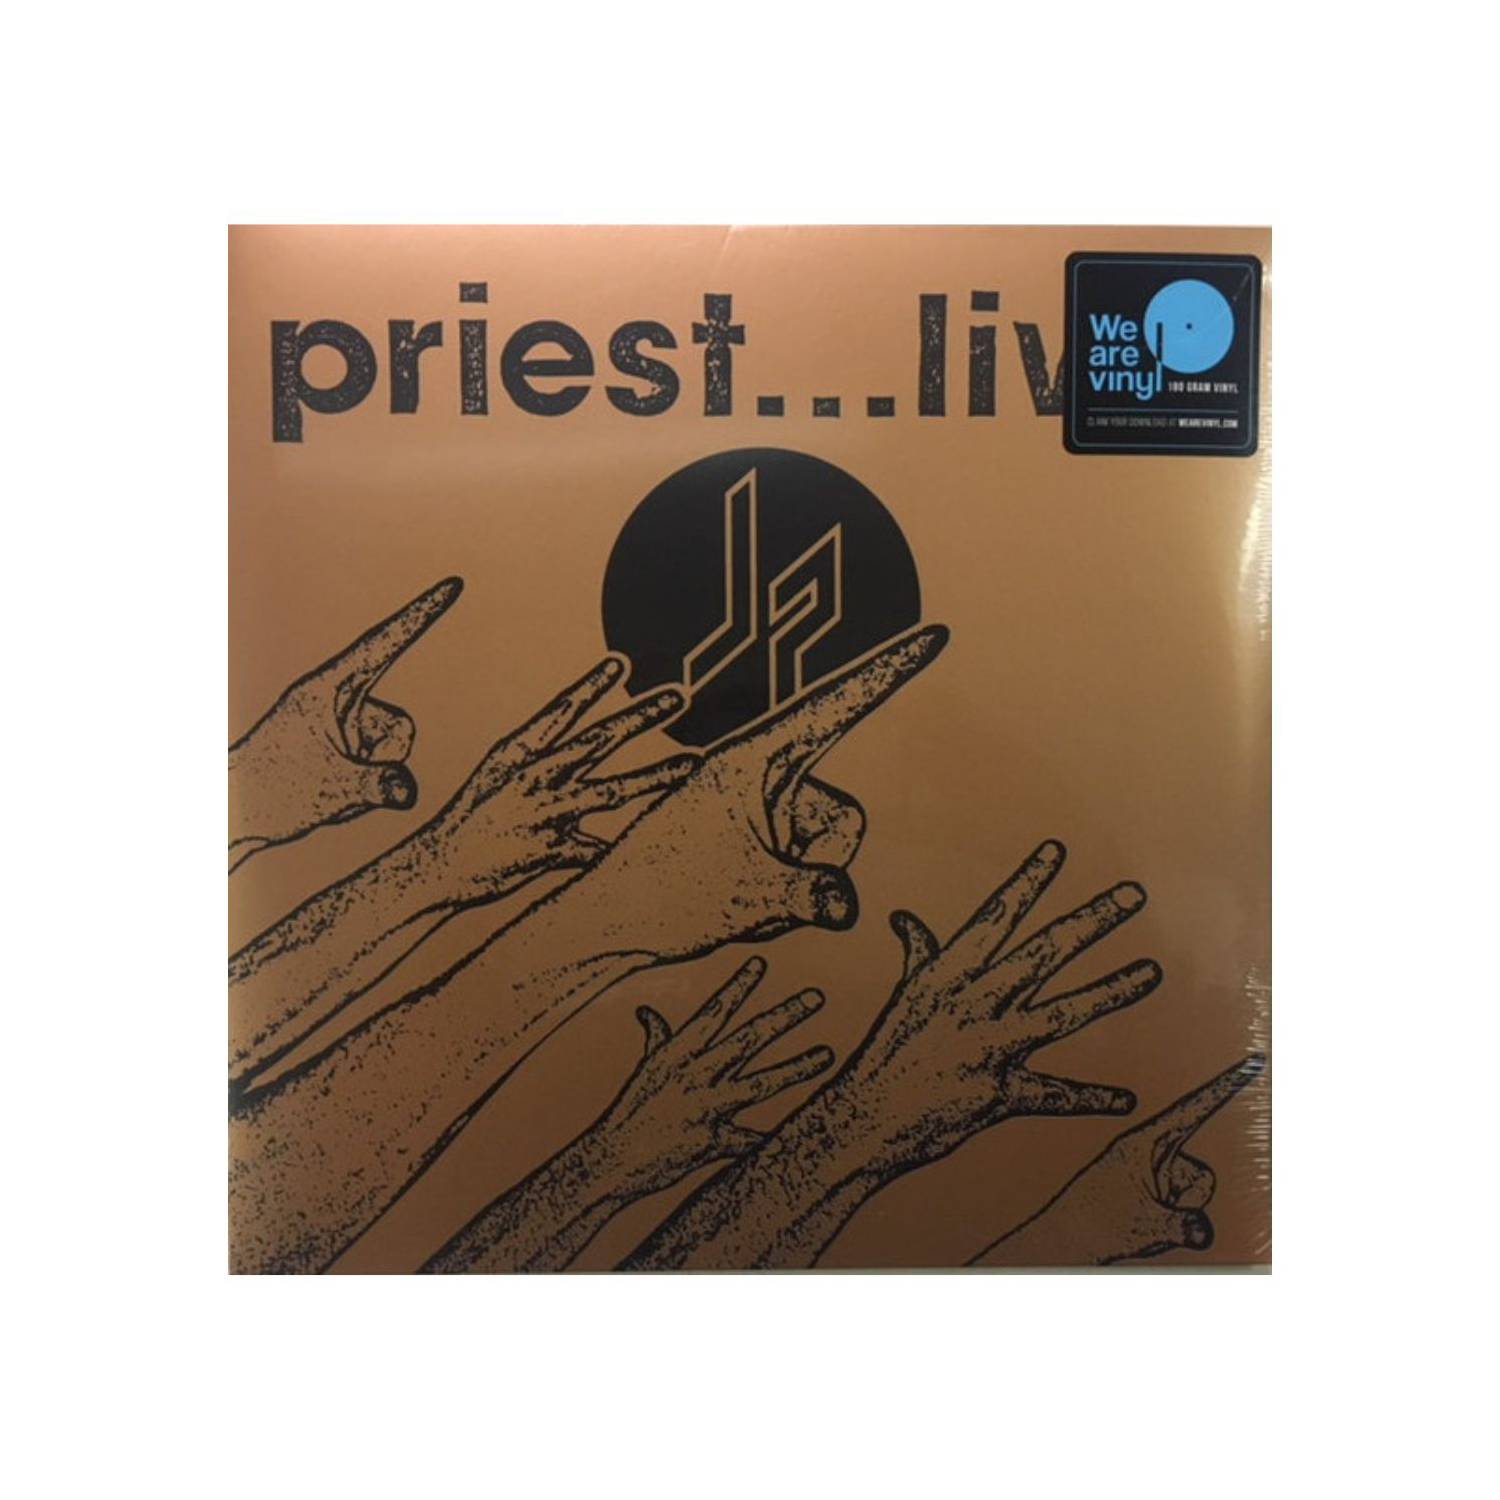 HITWAY MUSIC JUDAS PRIEST - PRIEST LIVE VINILO HITWAY MUSIC